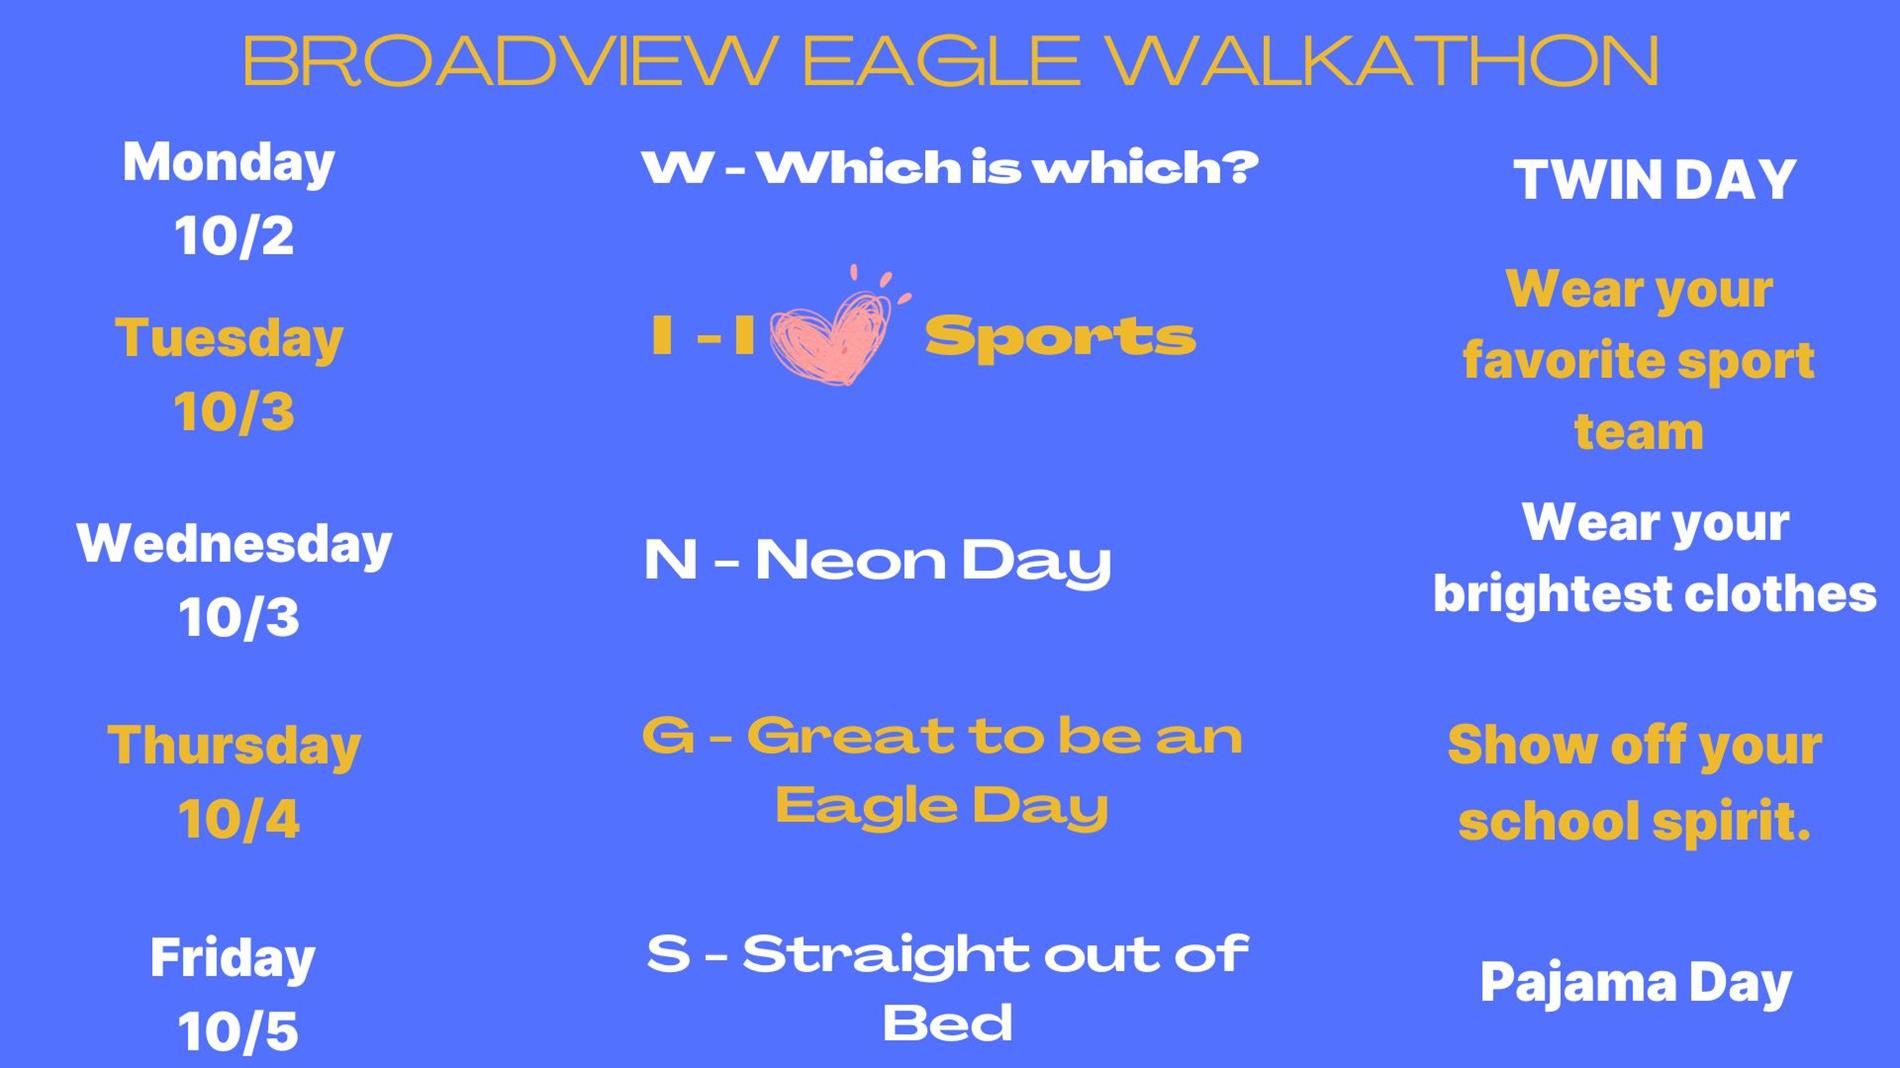 Eagle Walkathon Fun Week